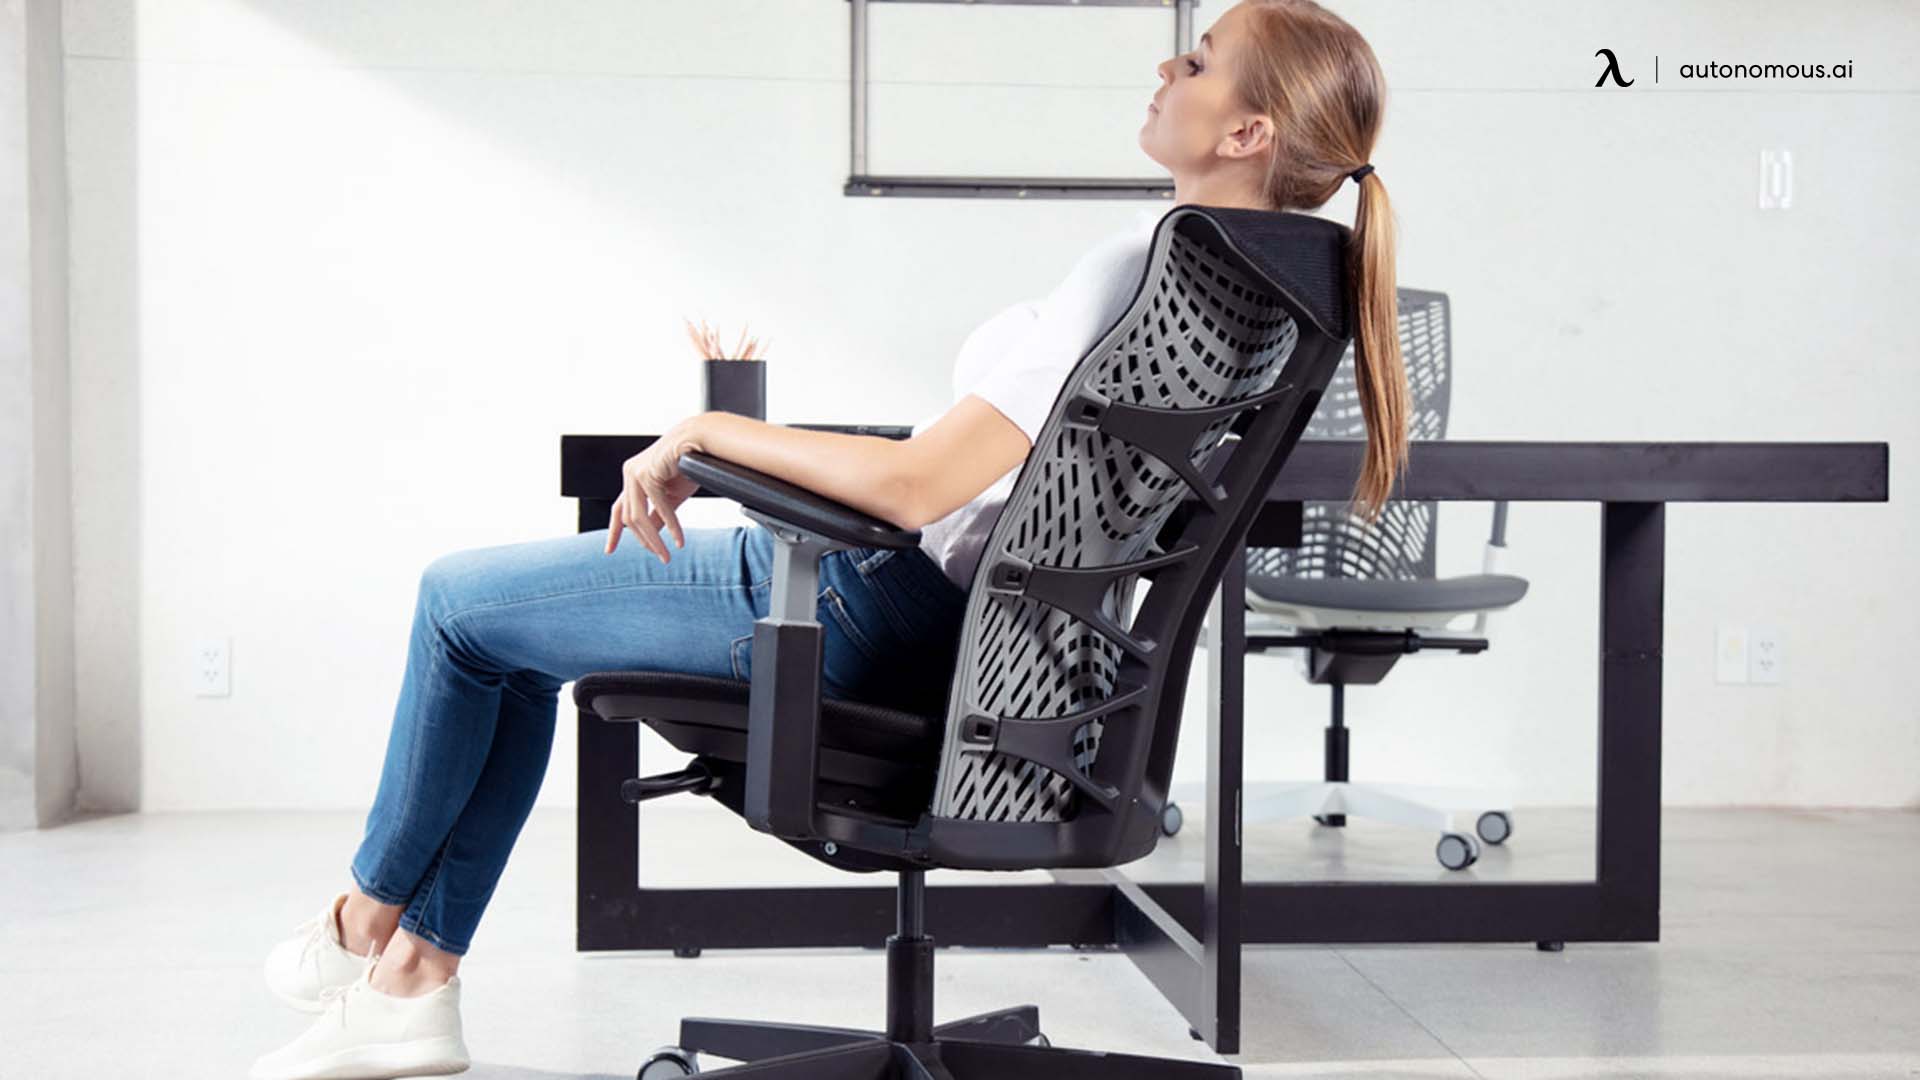 What makes a modern computer chair ergonomic?